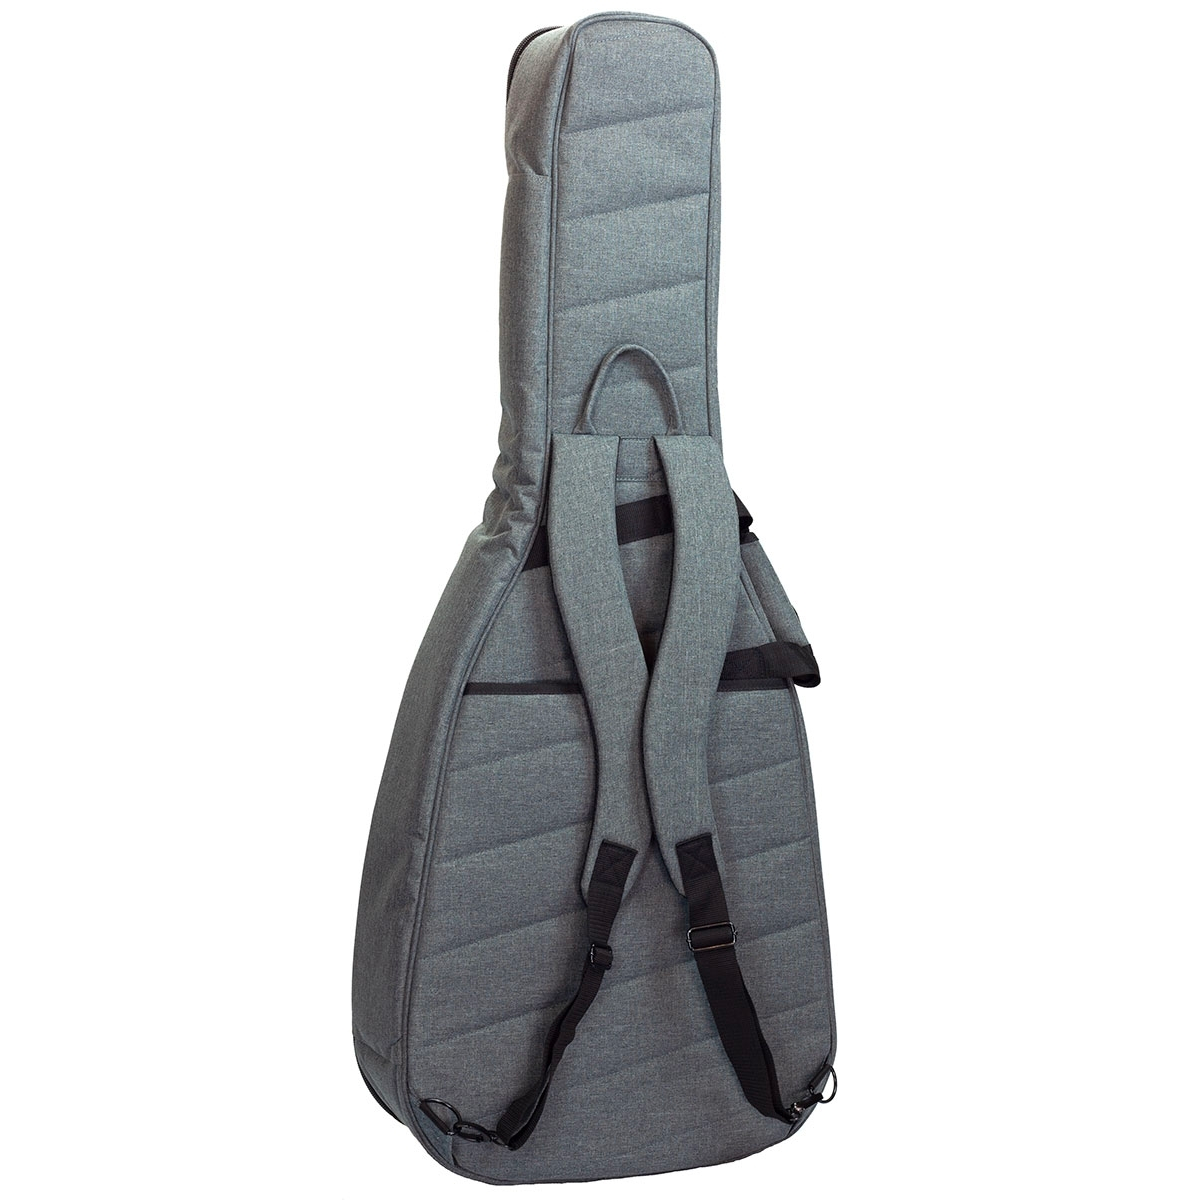 TGI Extreme Series Acoustic Guitar Gig Bag - Fits up to Jumbo Size